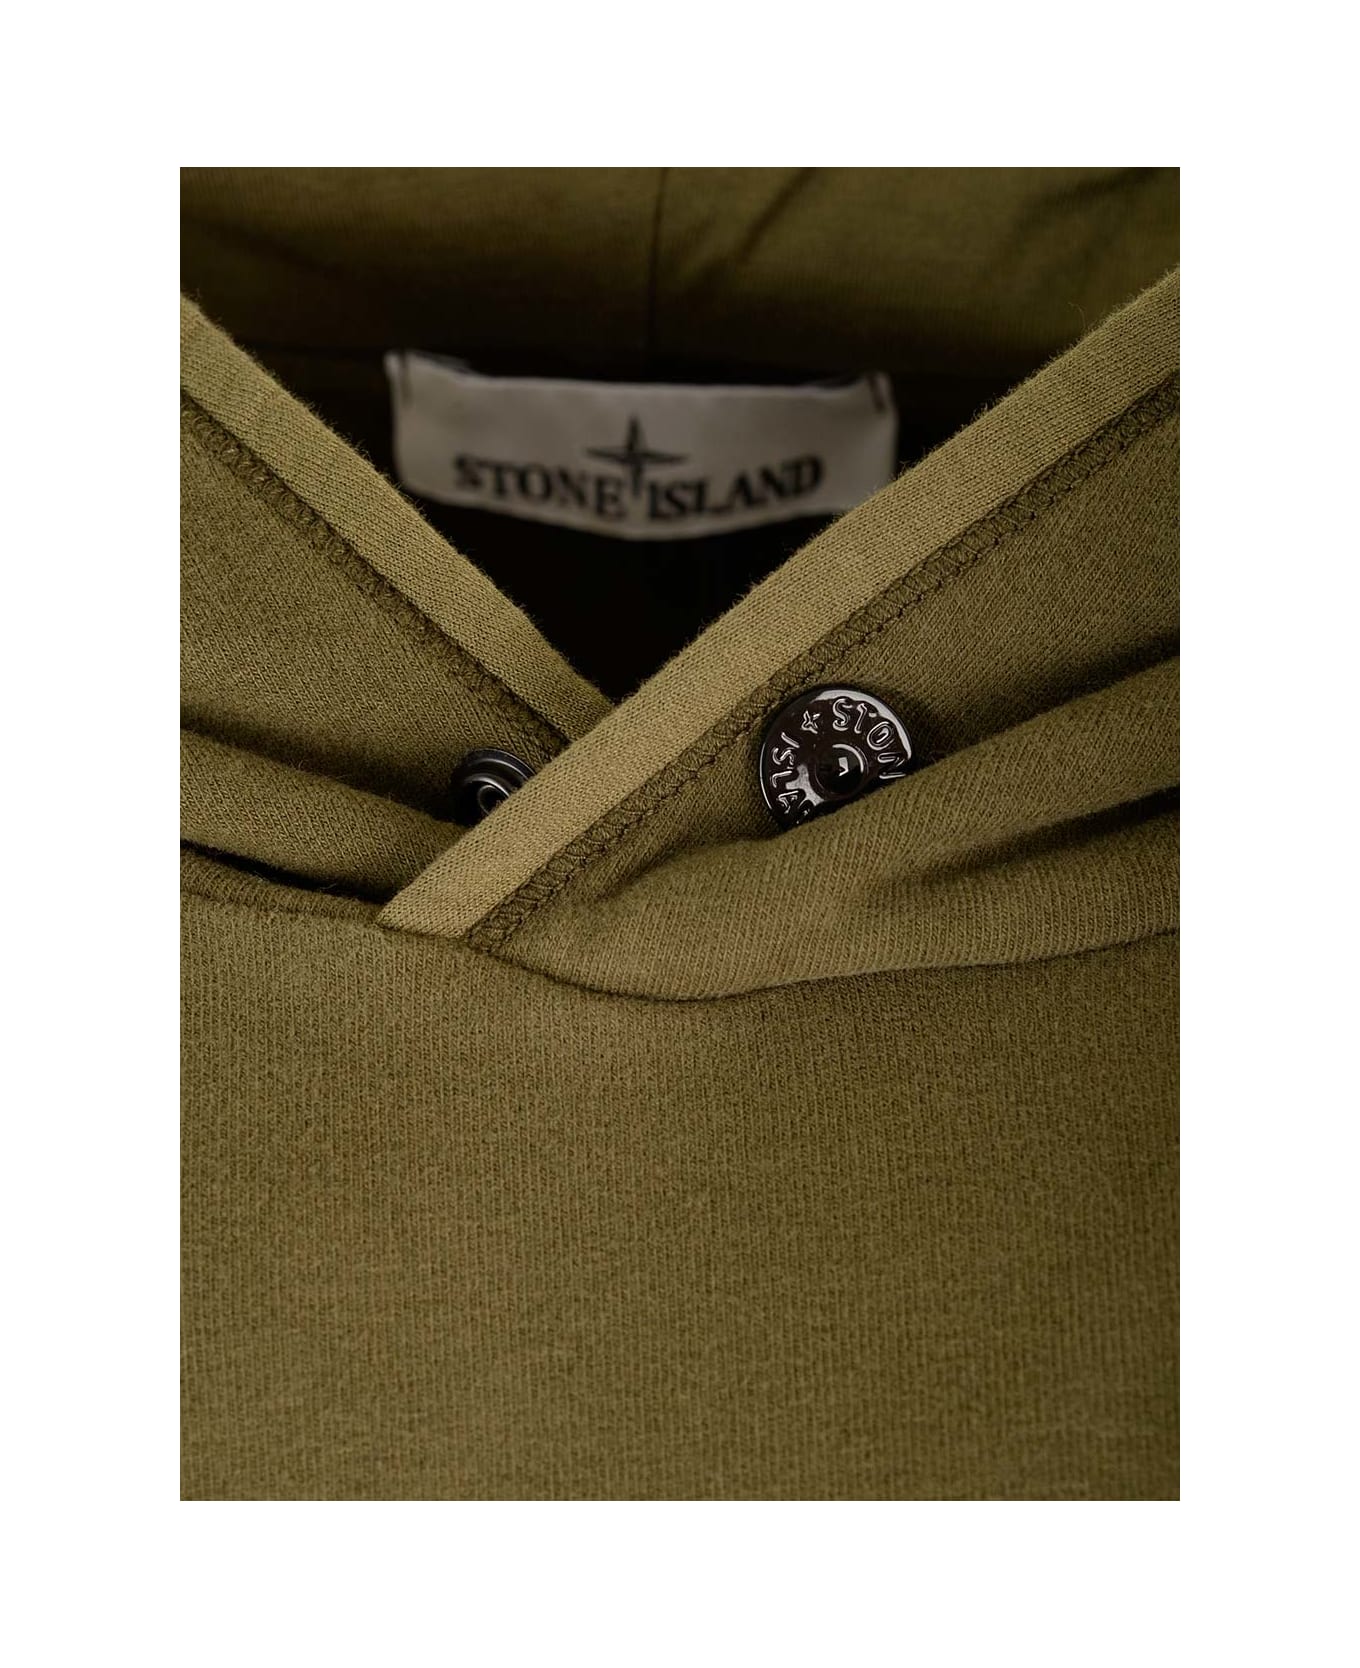 Stone Island Hooded Sweatshirt - Olive